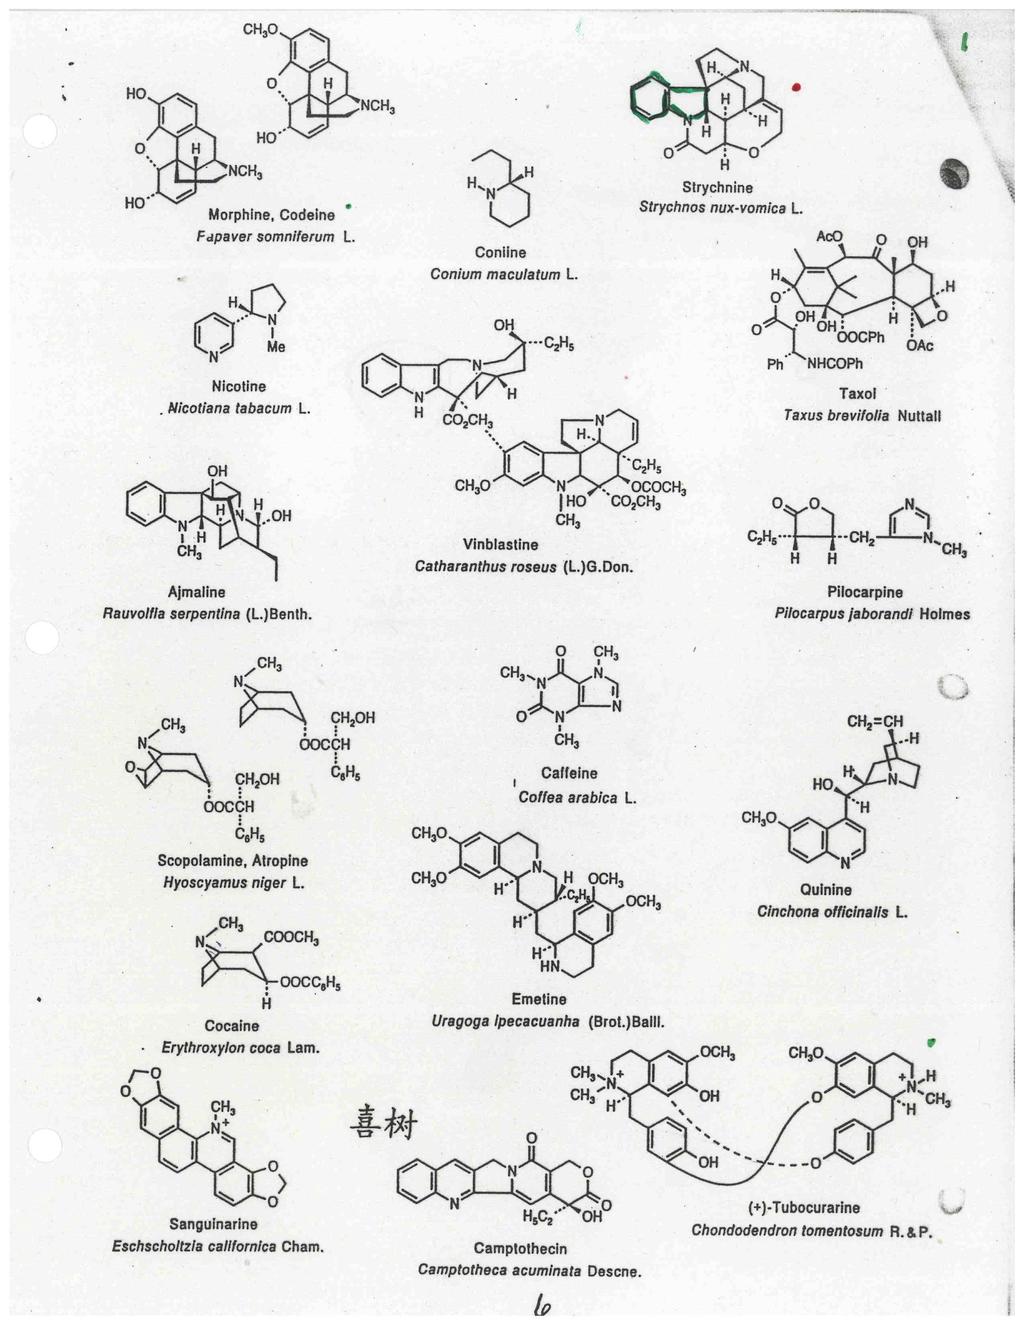 Examples of diverse mechanisms of ac)on: - bind/block neuroreceptors (morphine, codeine) - block reuptake of neuroreceptor (cocaine- dopamine) -